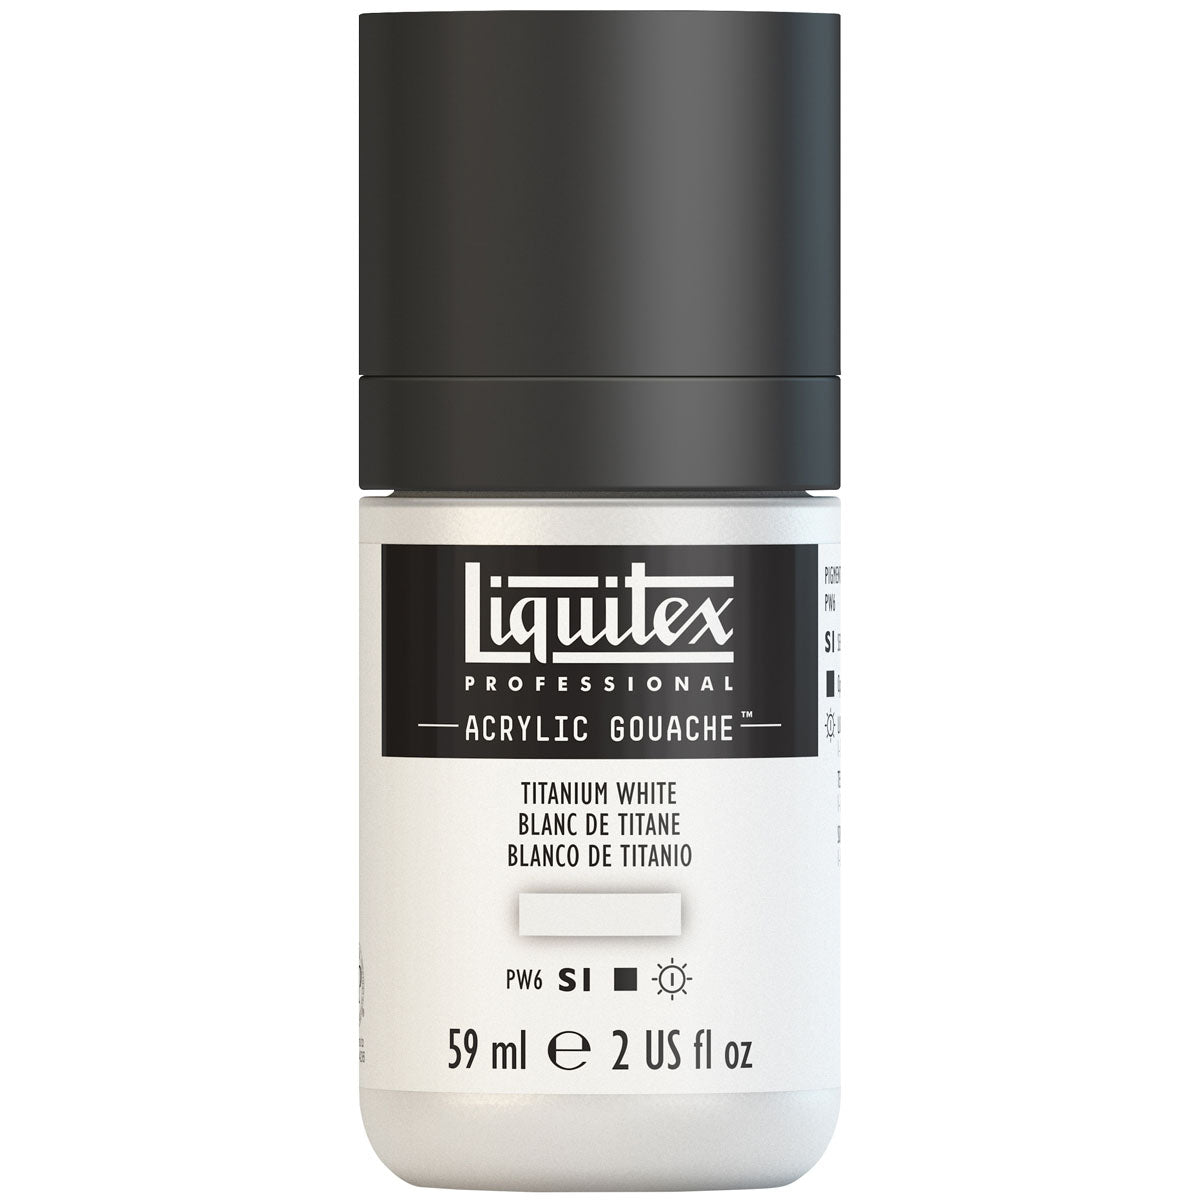 Liquitex - Acrylic Gouache 59ml S1 - Titanium White